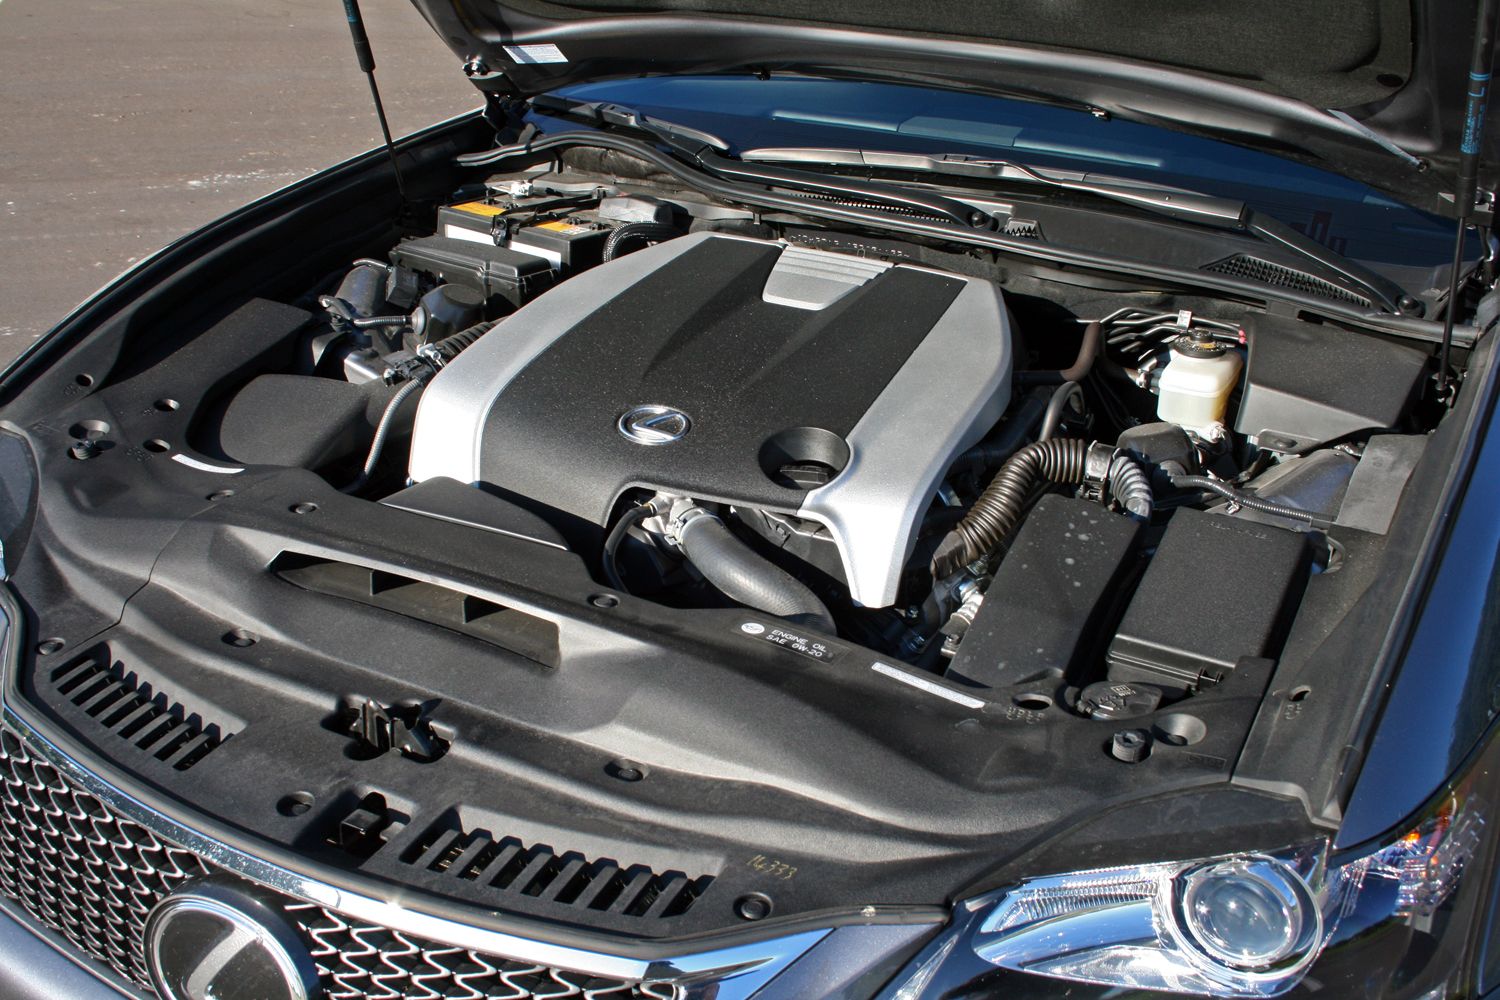 2014 Lexus GS 350 F Sport - Driven